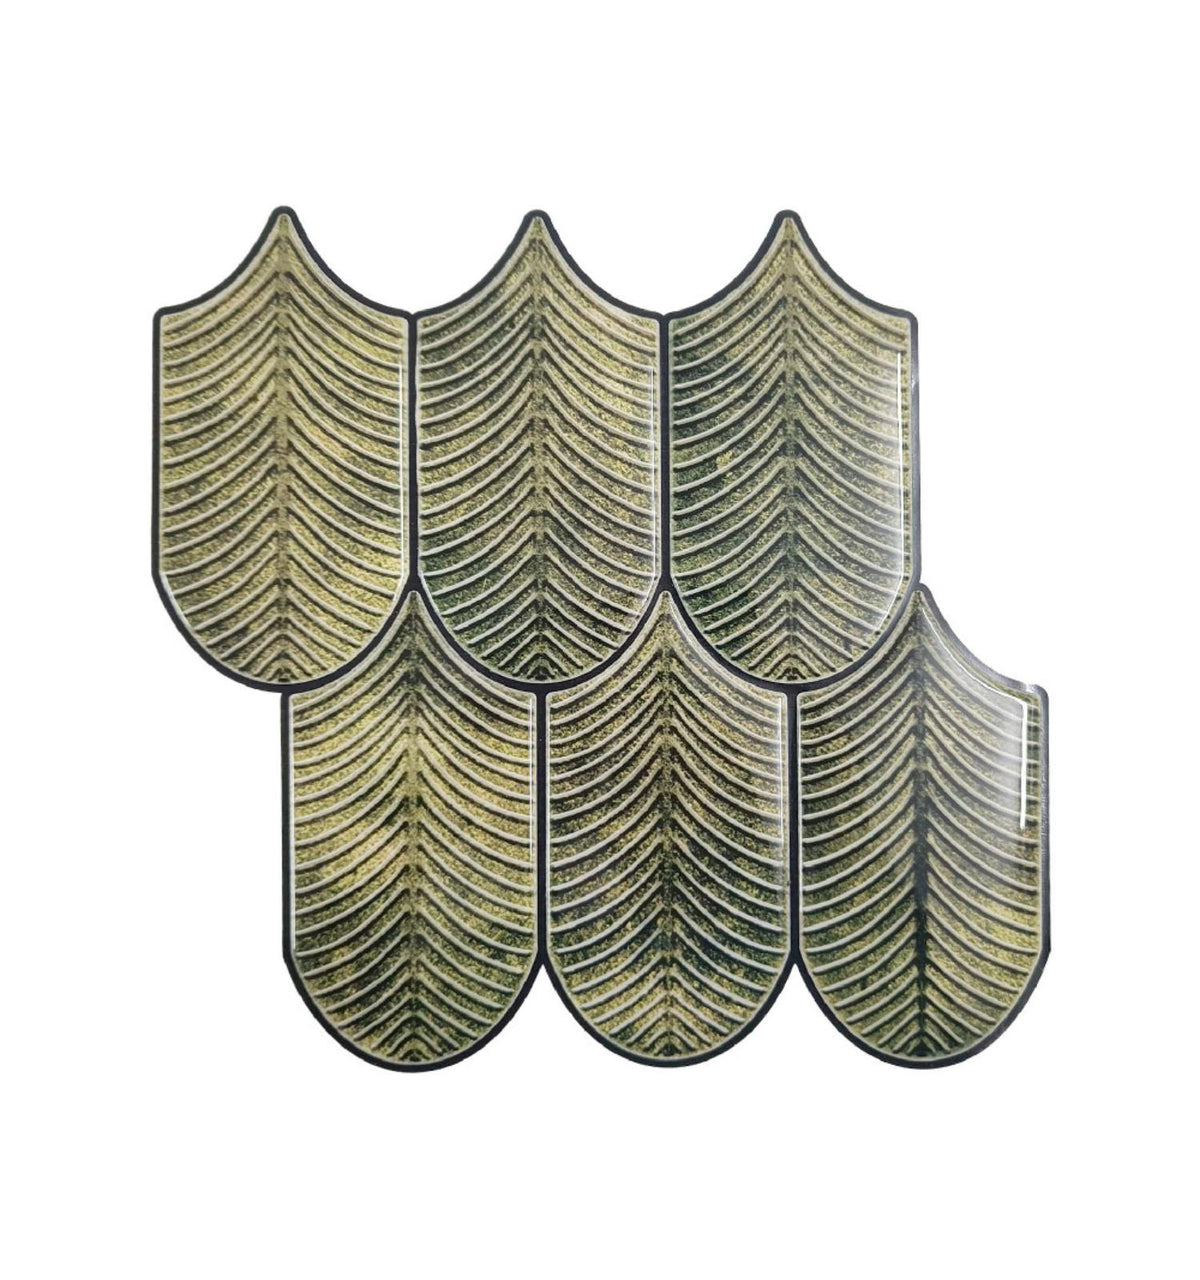 3D Peel and Stick Olive Green Tiles | self Adhesive Peel & Stick Backsplash tiles for Home Décor